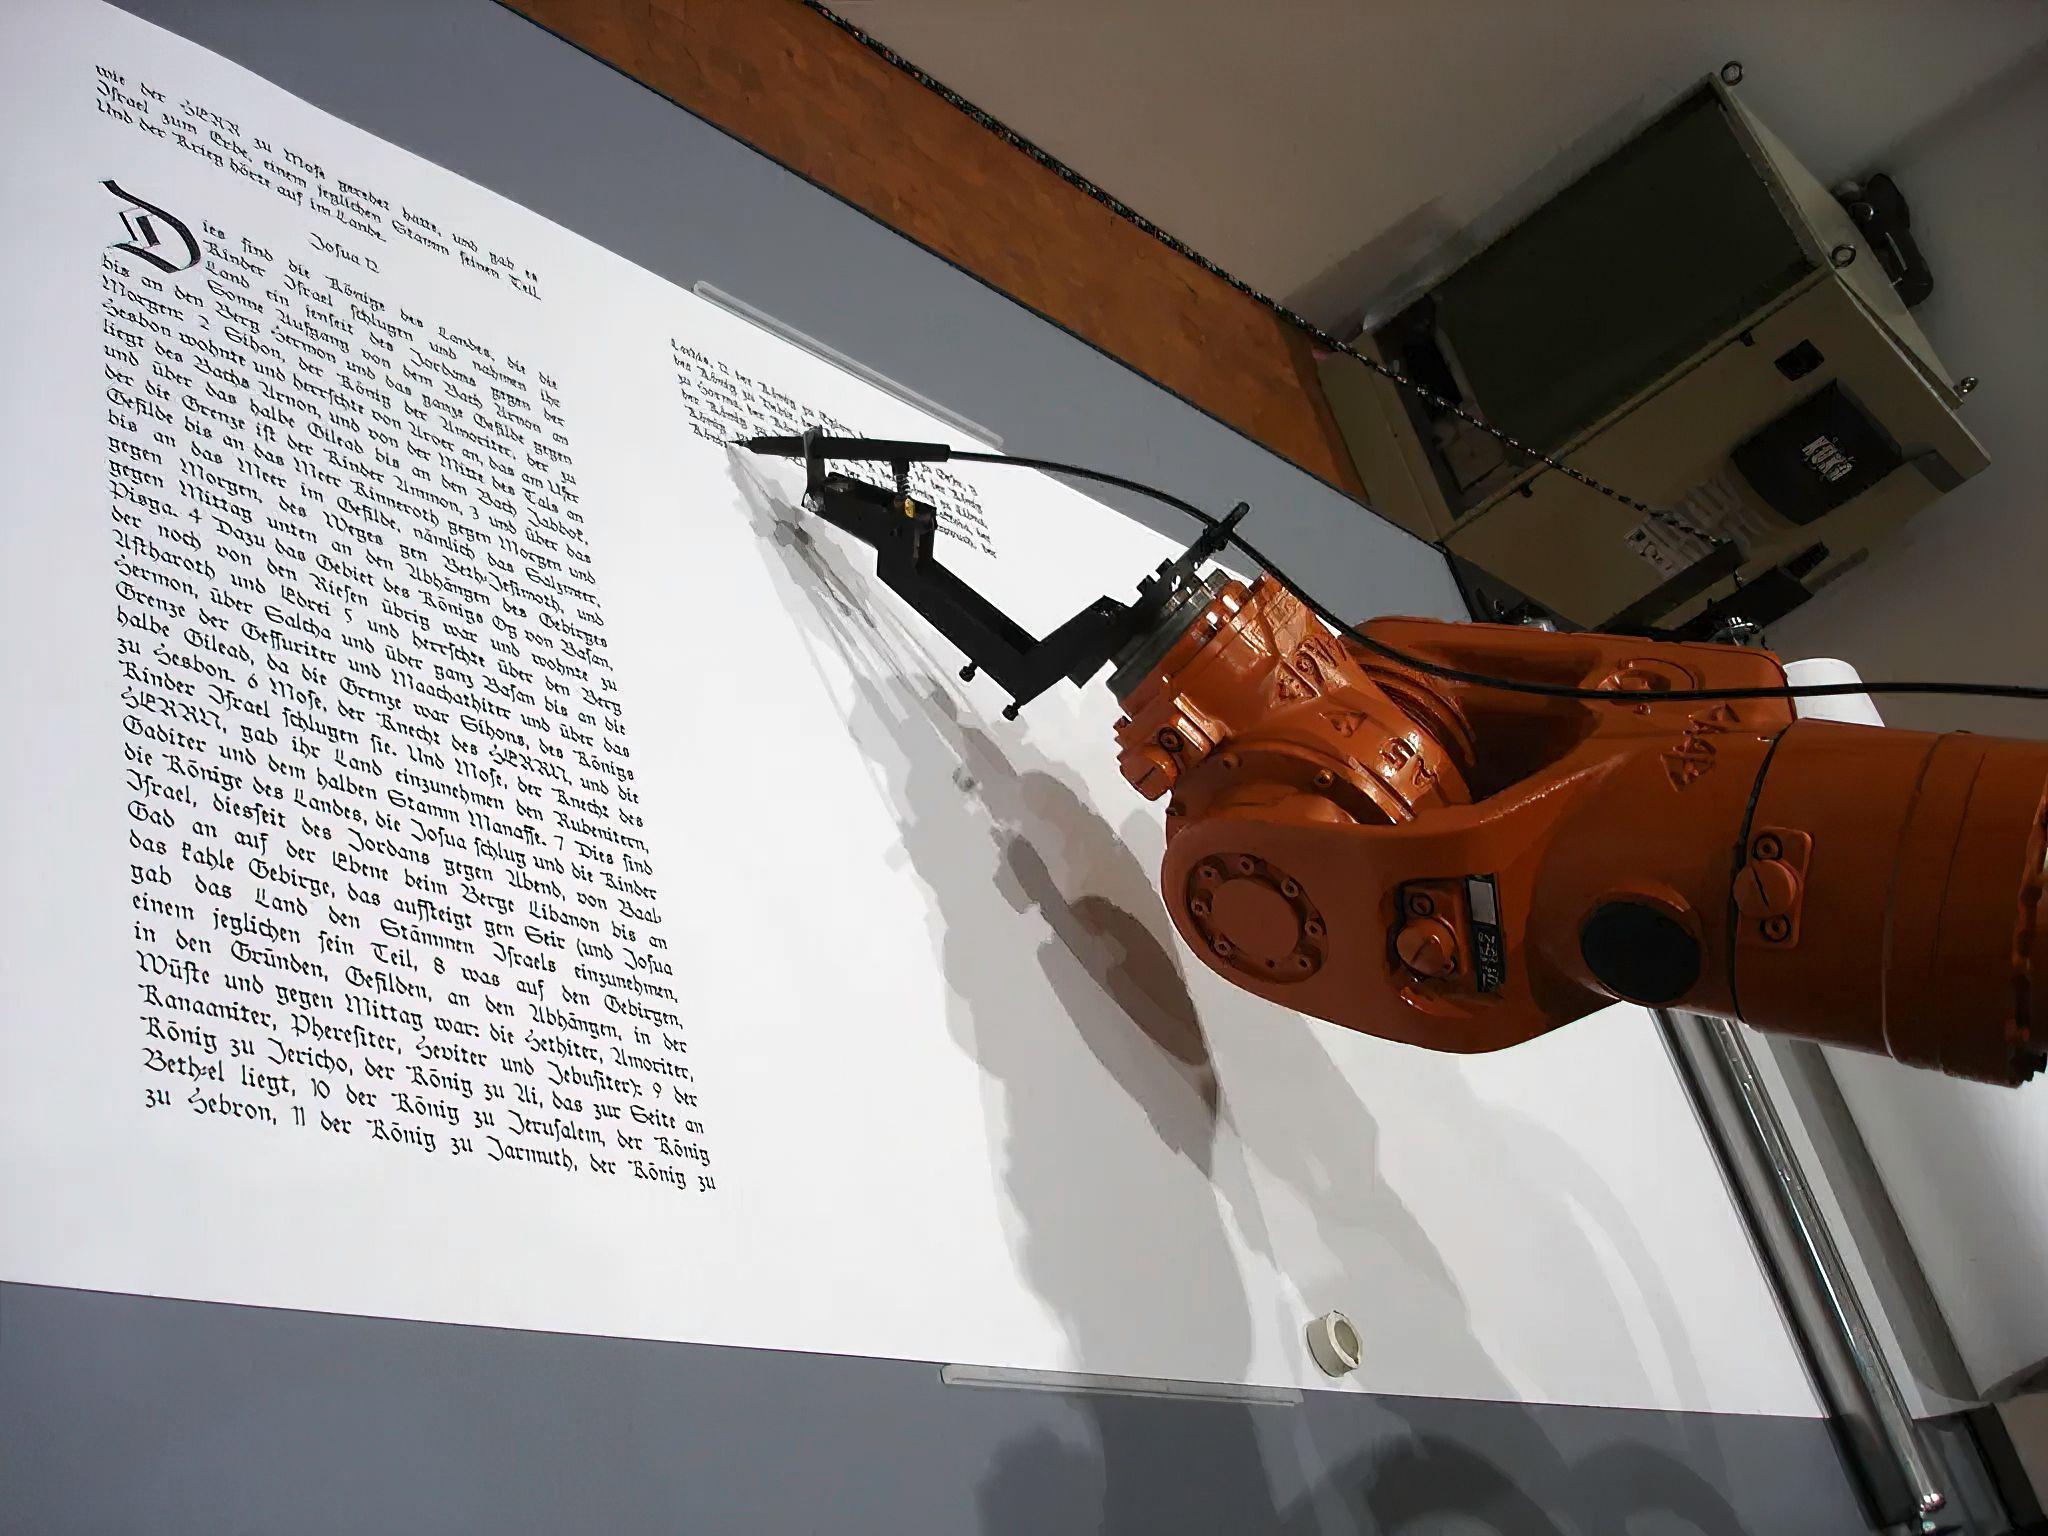 Abu Dhabi researchers developed AI to mimic handwriting